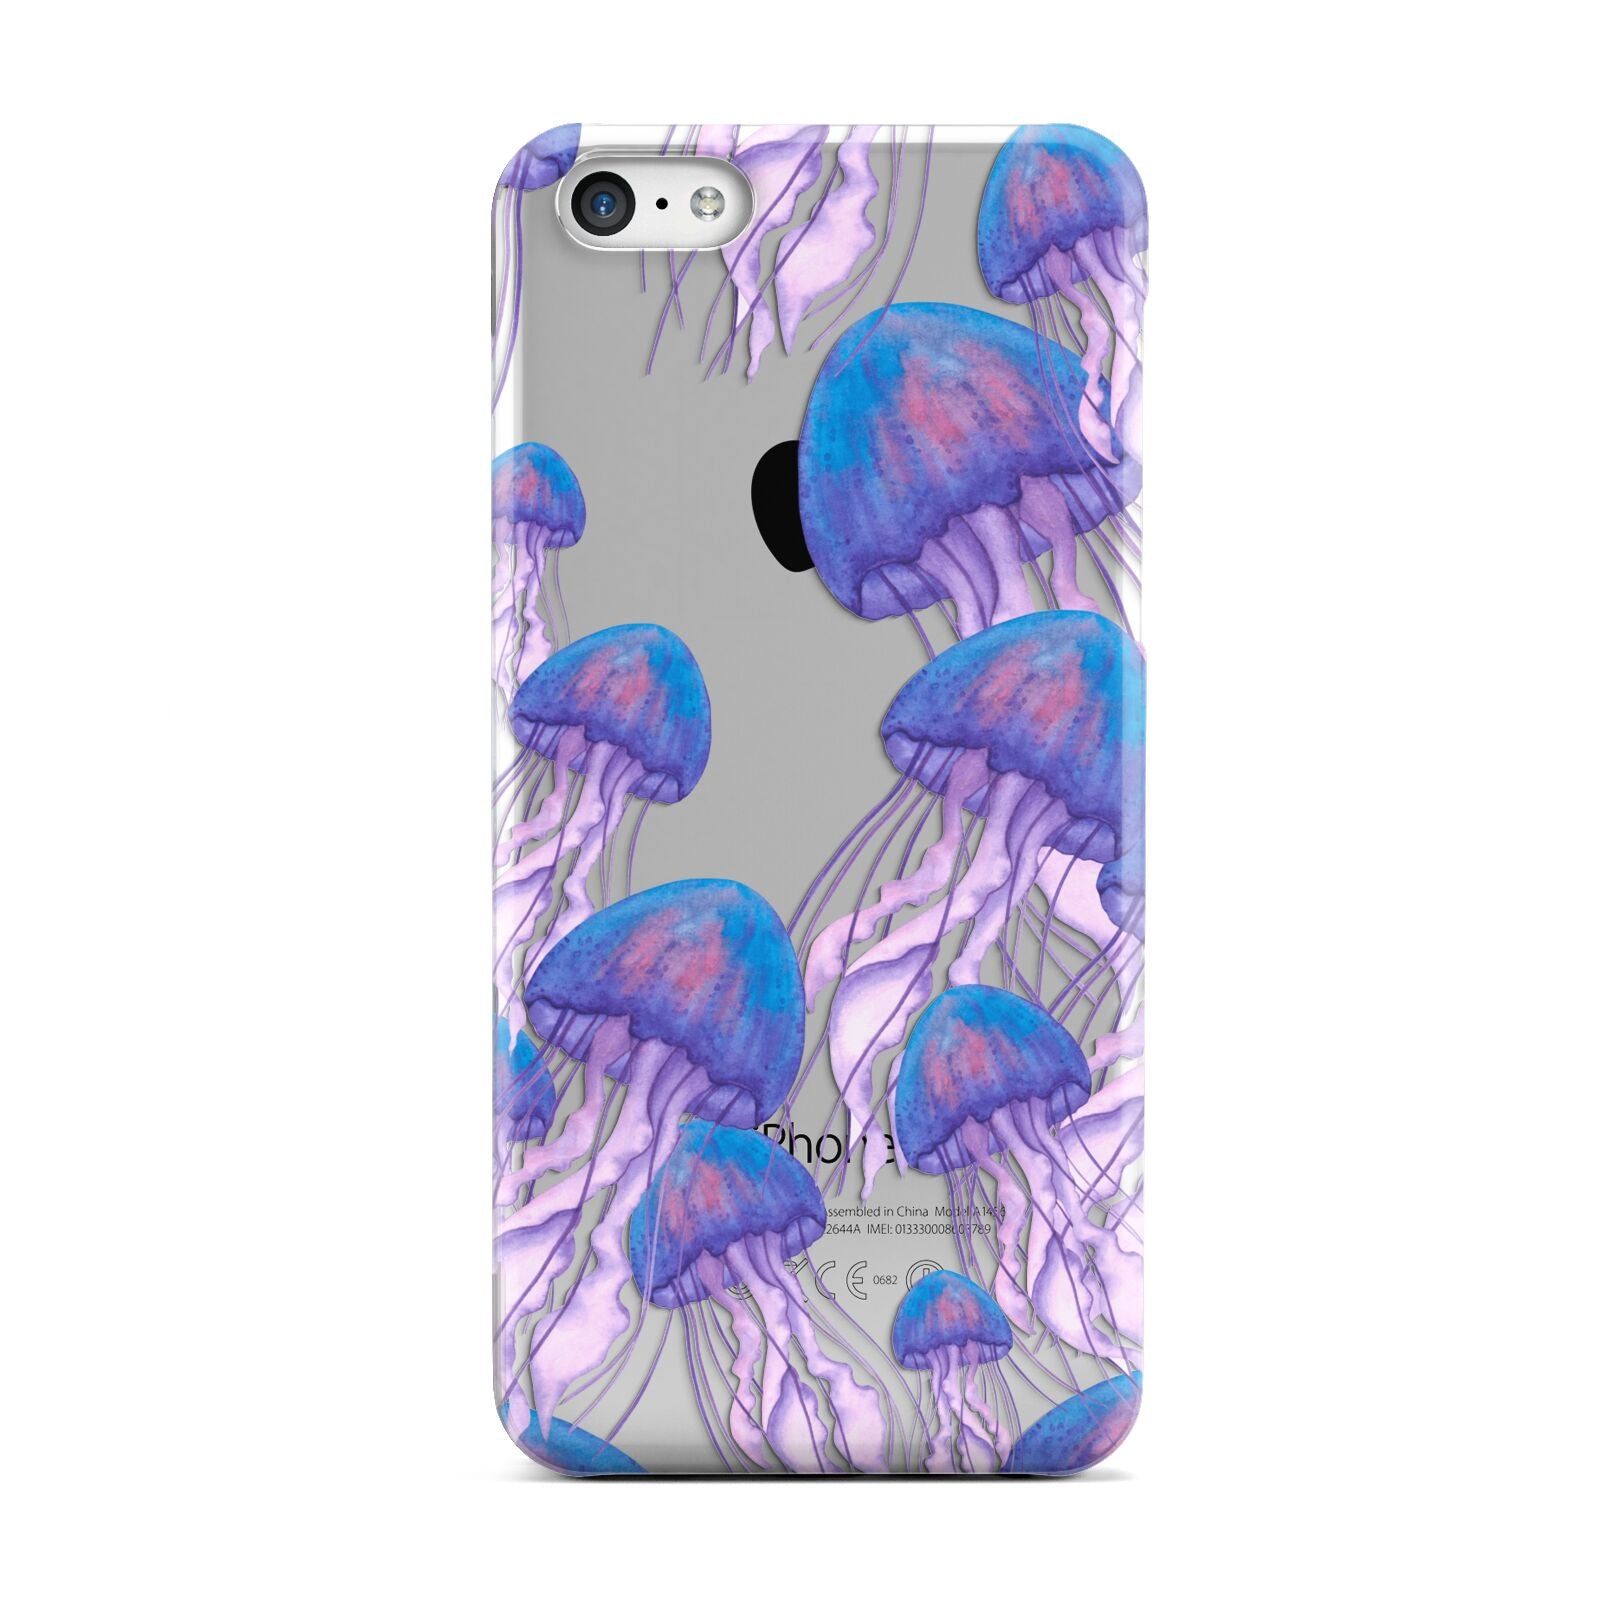 Jellyfish Apple iPhone 5c Case